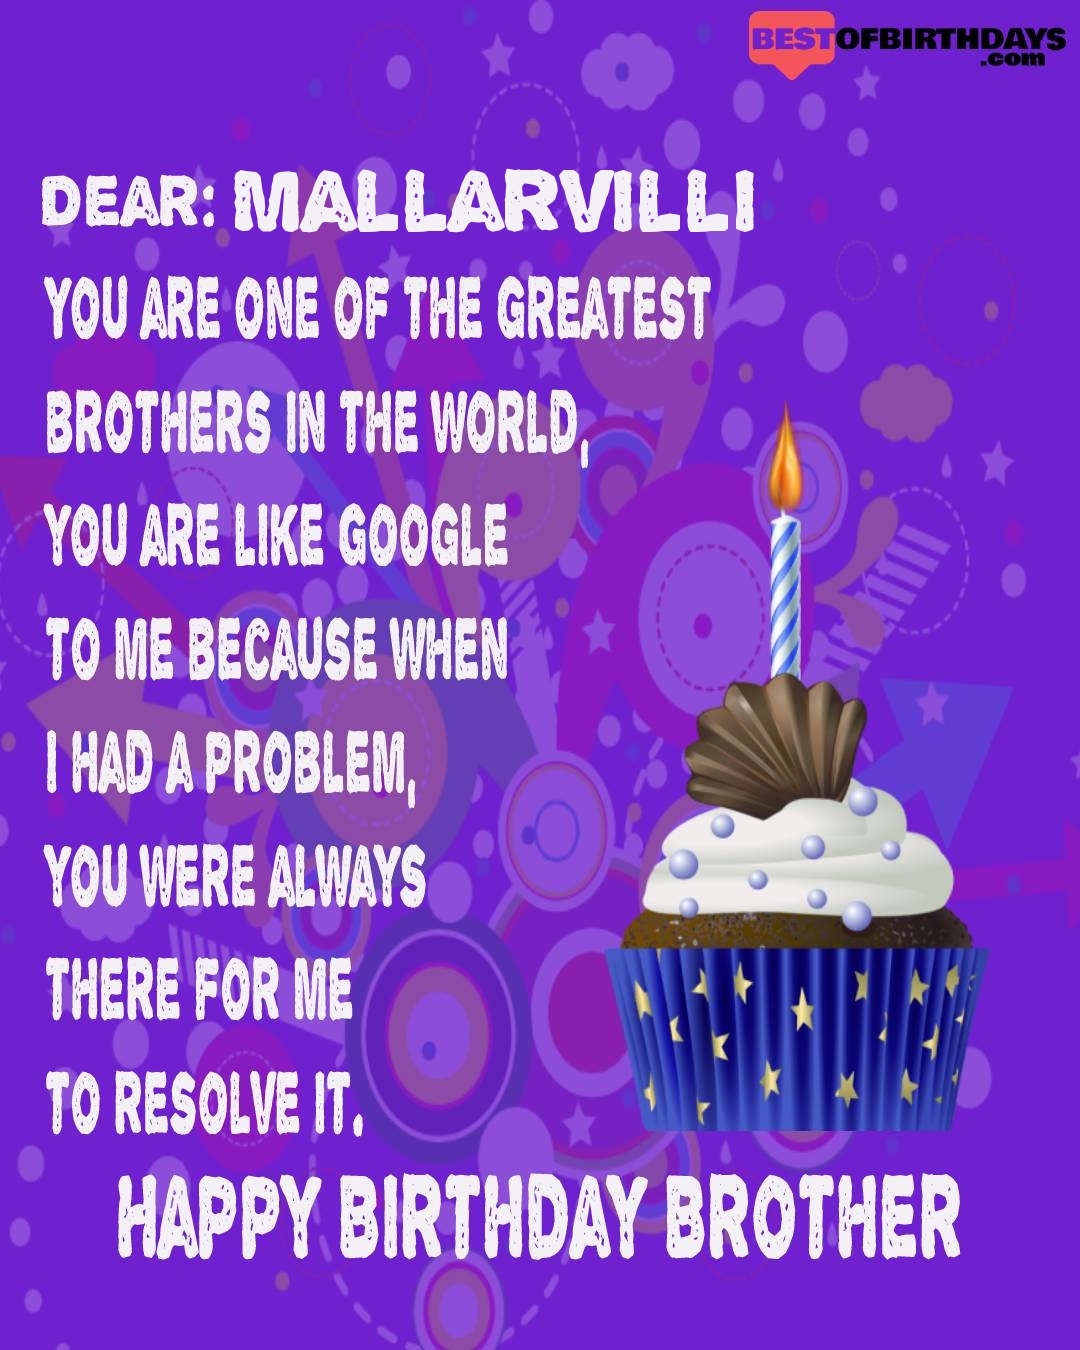 Happy birthday mallarvilli bhai brother bro